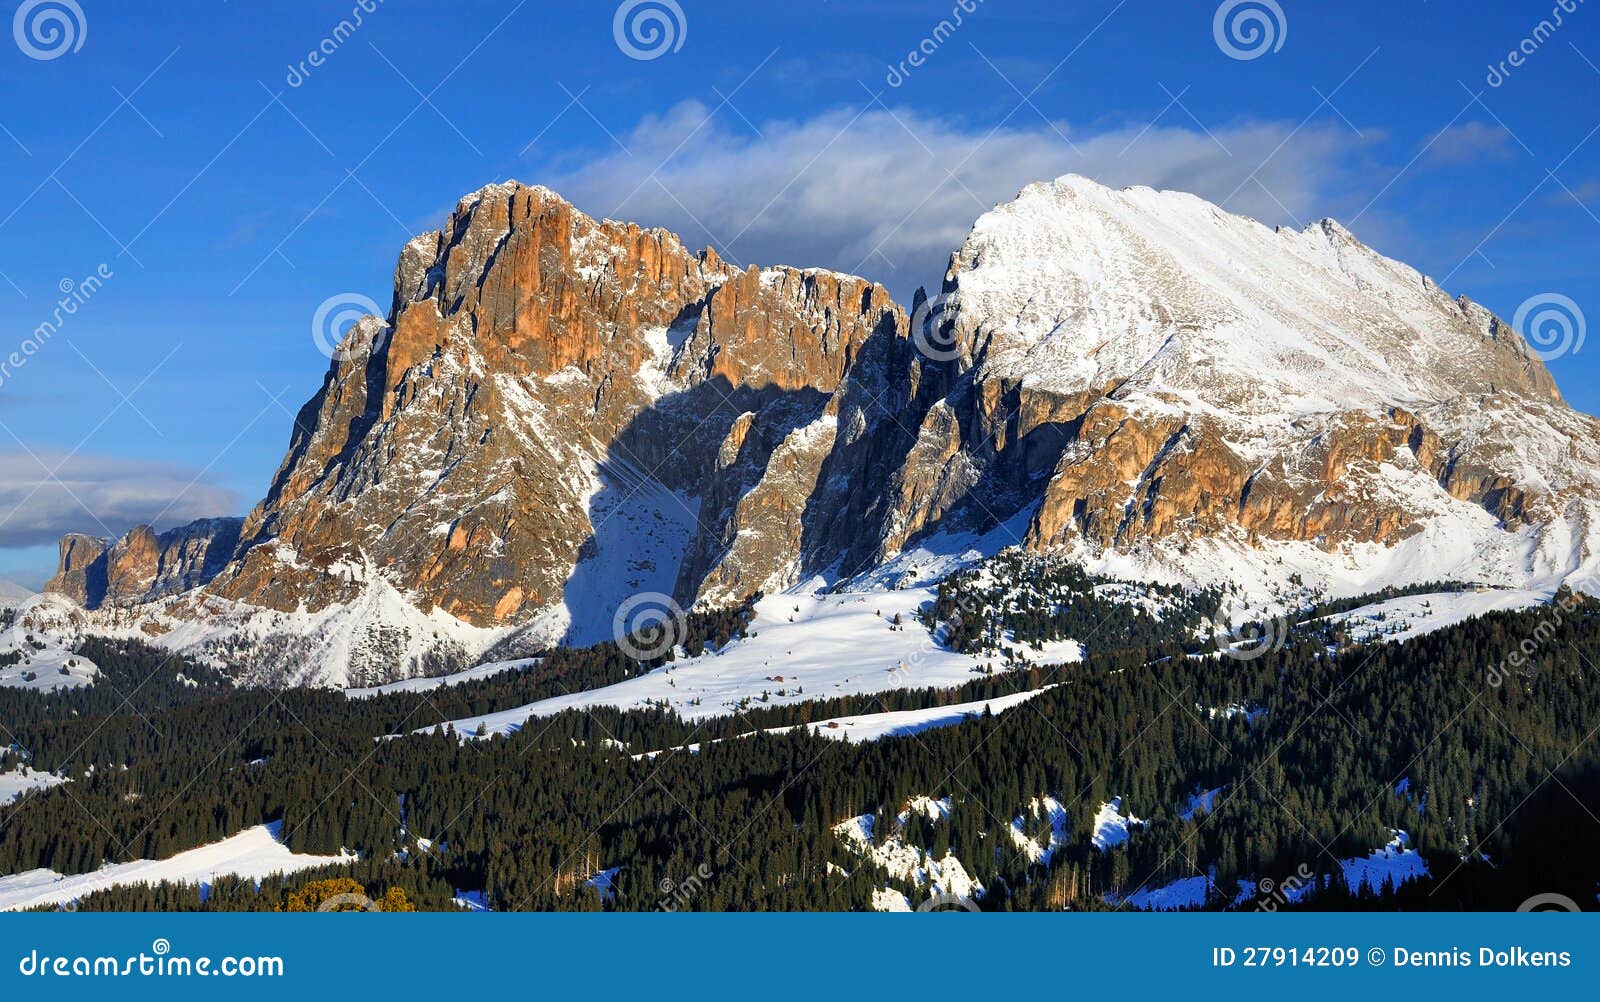 snowy mountains in val gardena